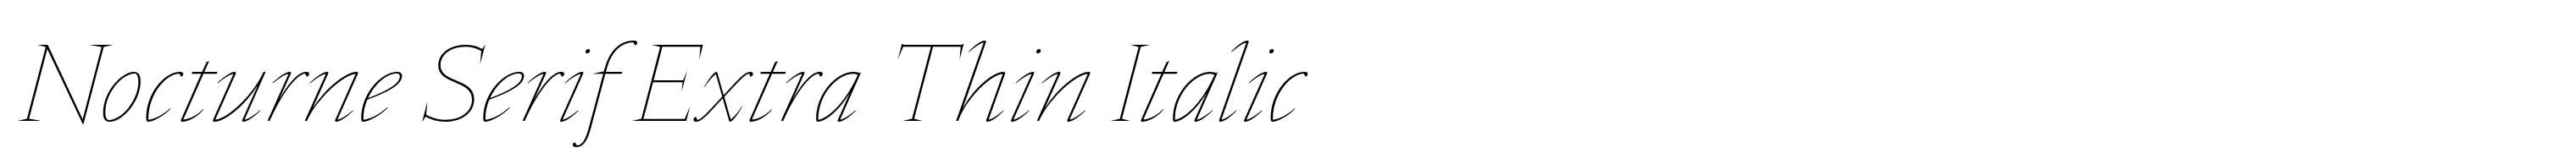 Nocturne Serif Extra Thin Italic